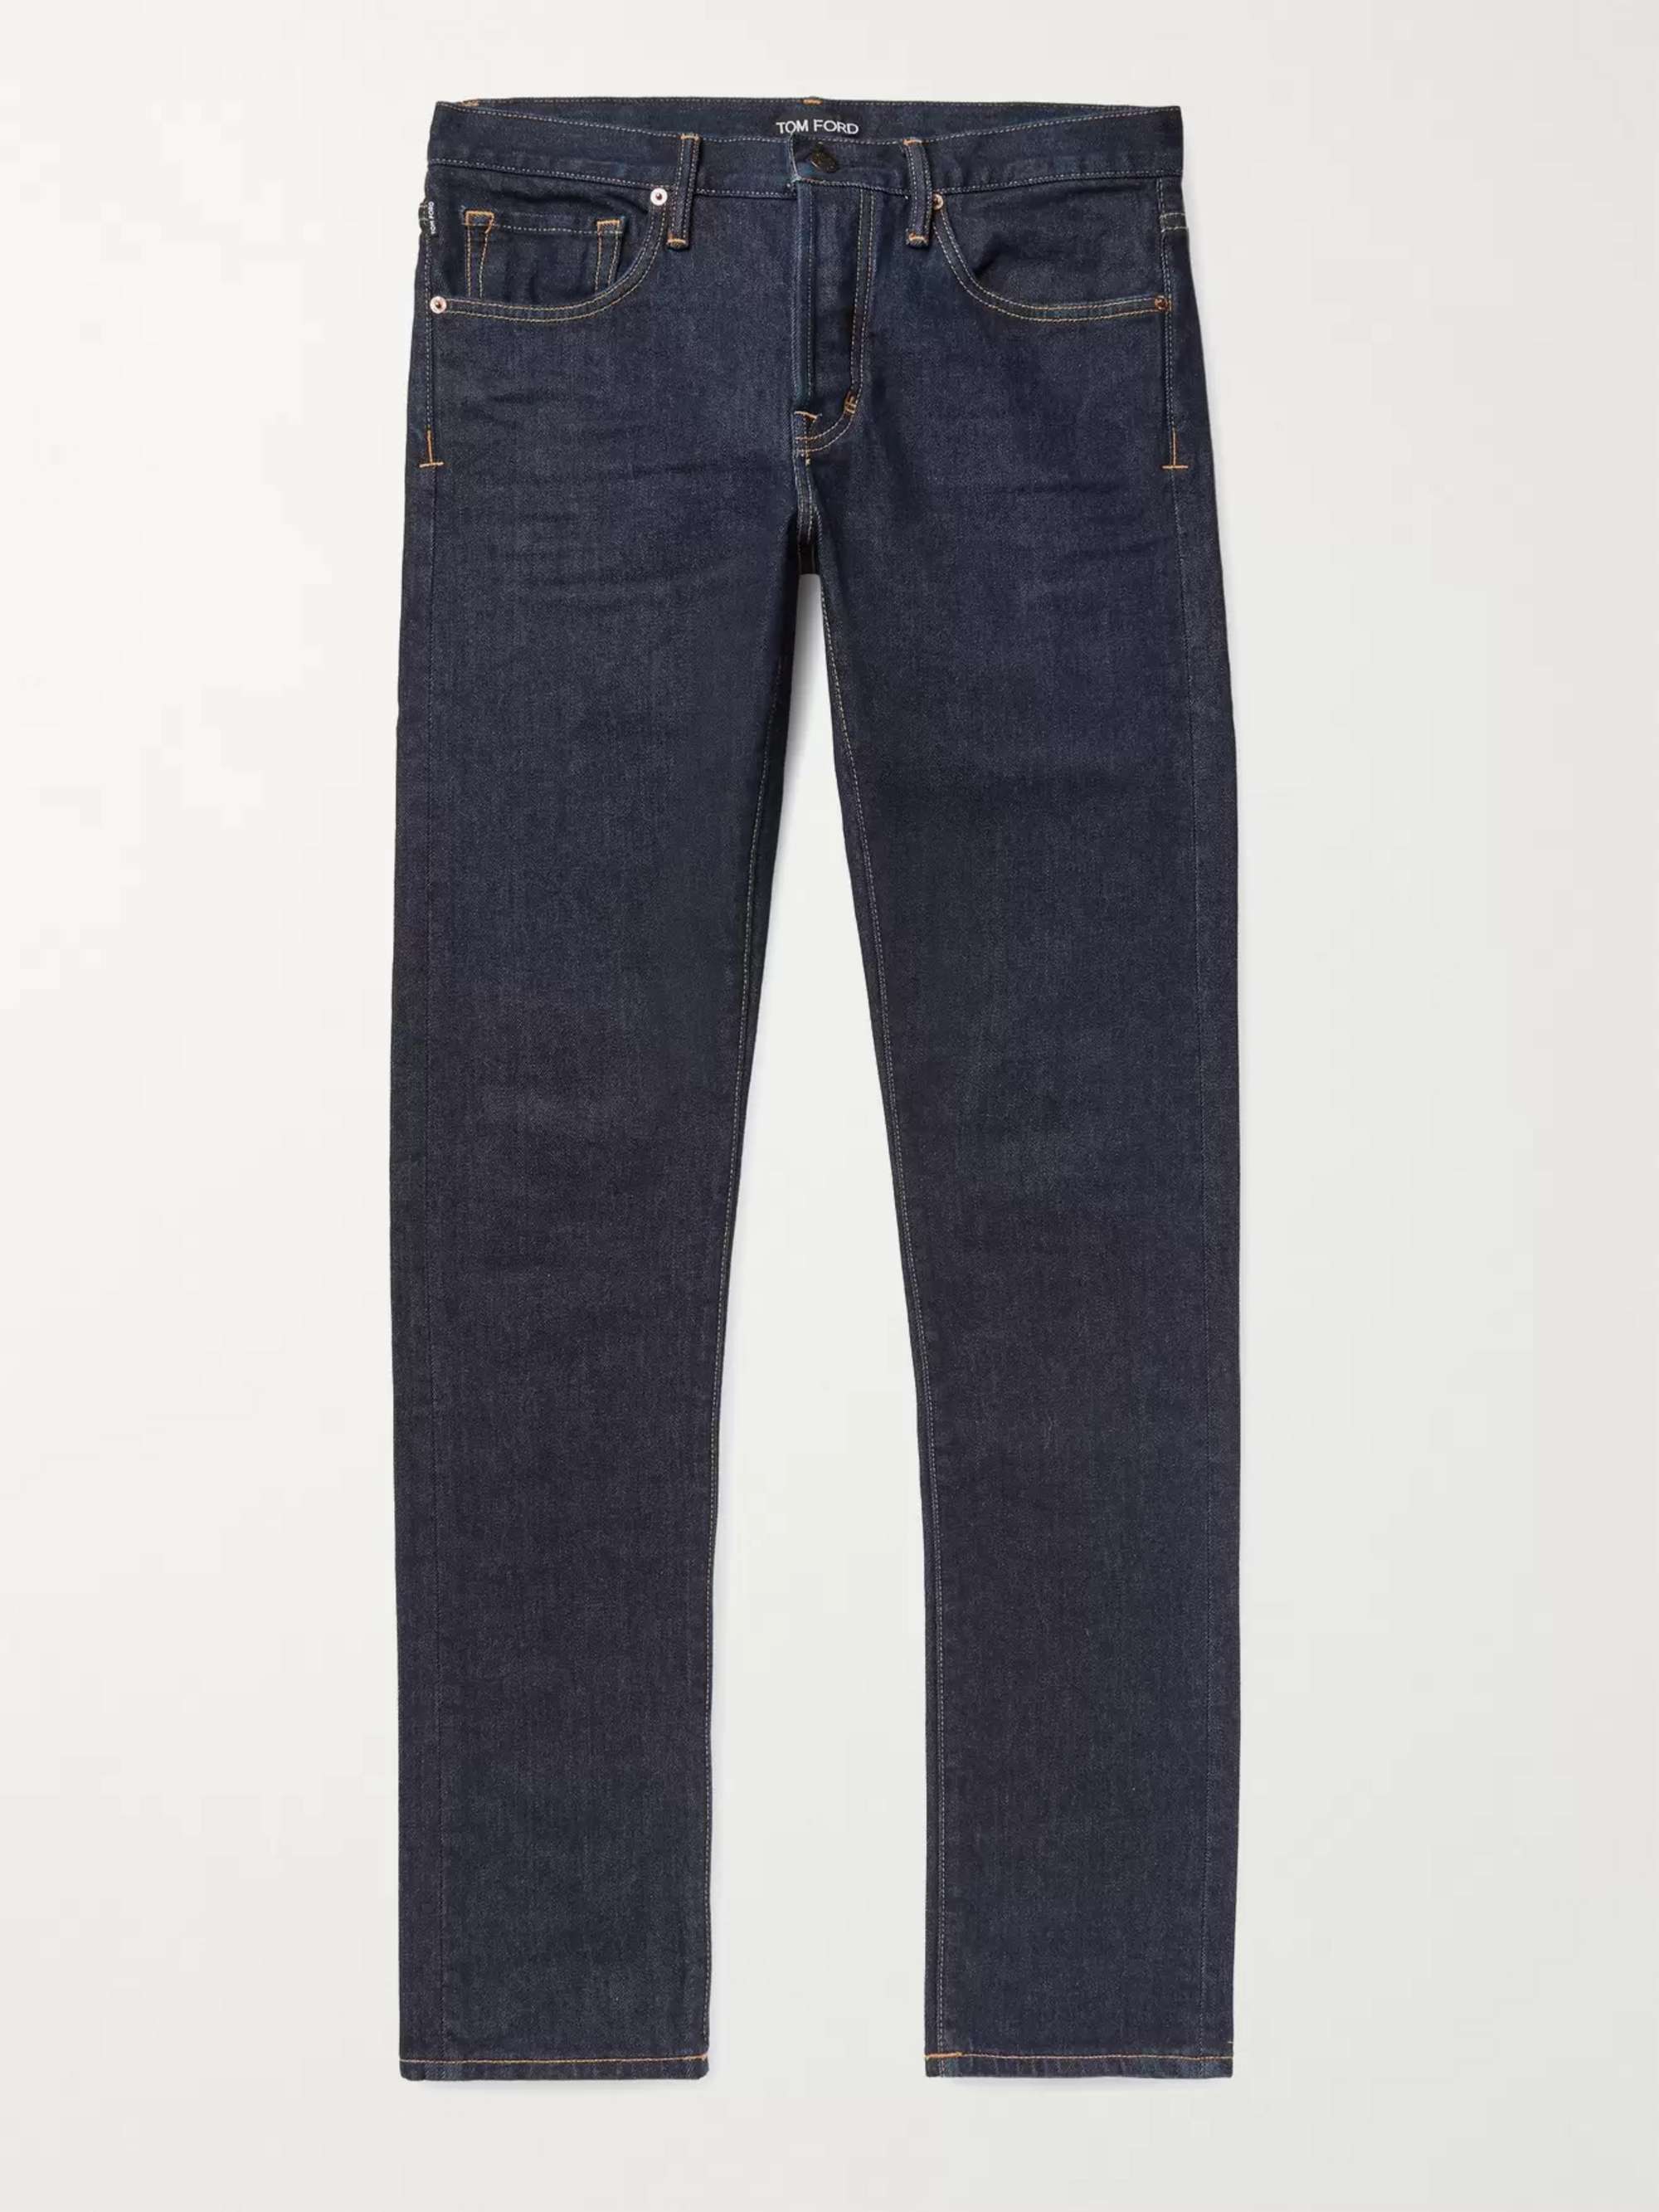 TOM FORD Slim-Fit Stretch-Denim Jeans